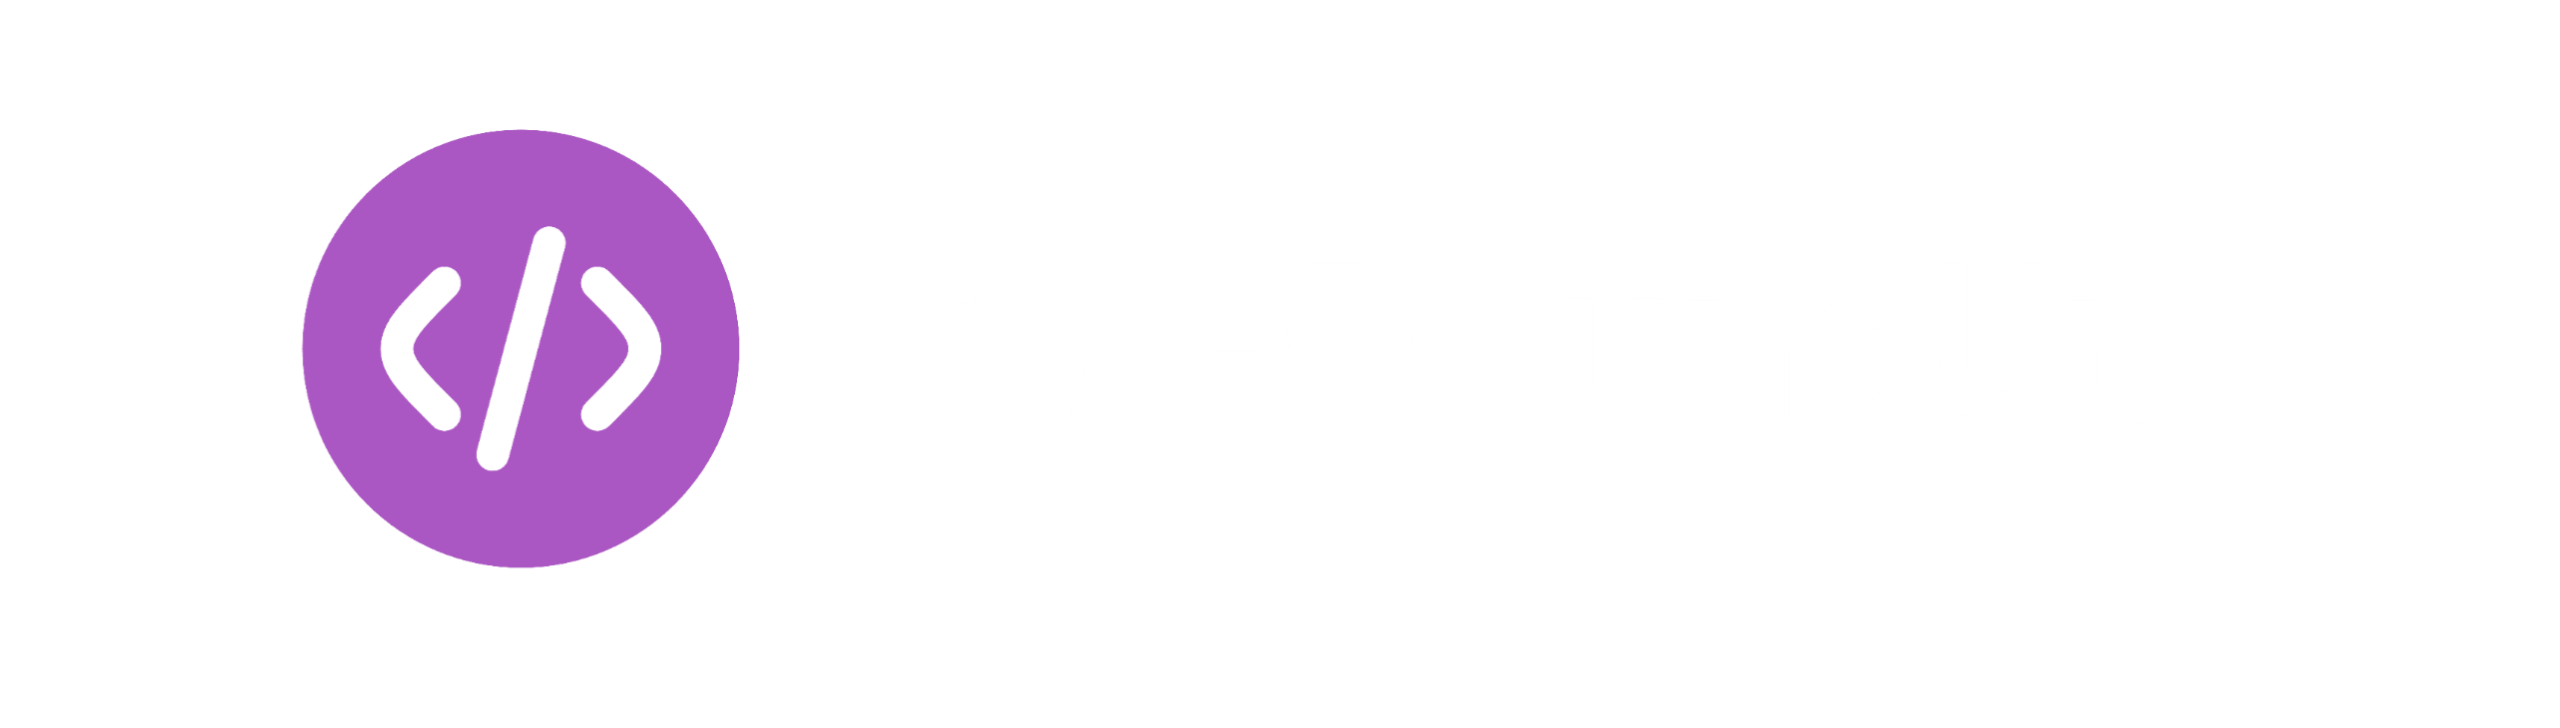 CodeRoundUp.com